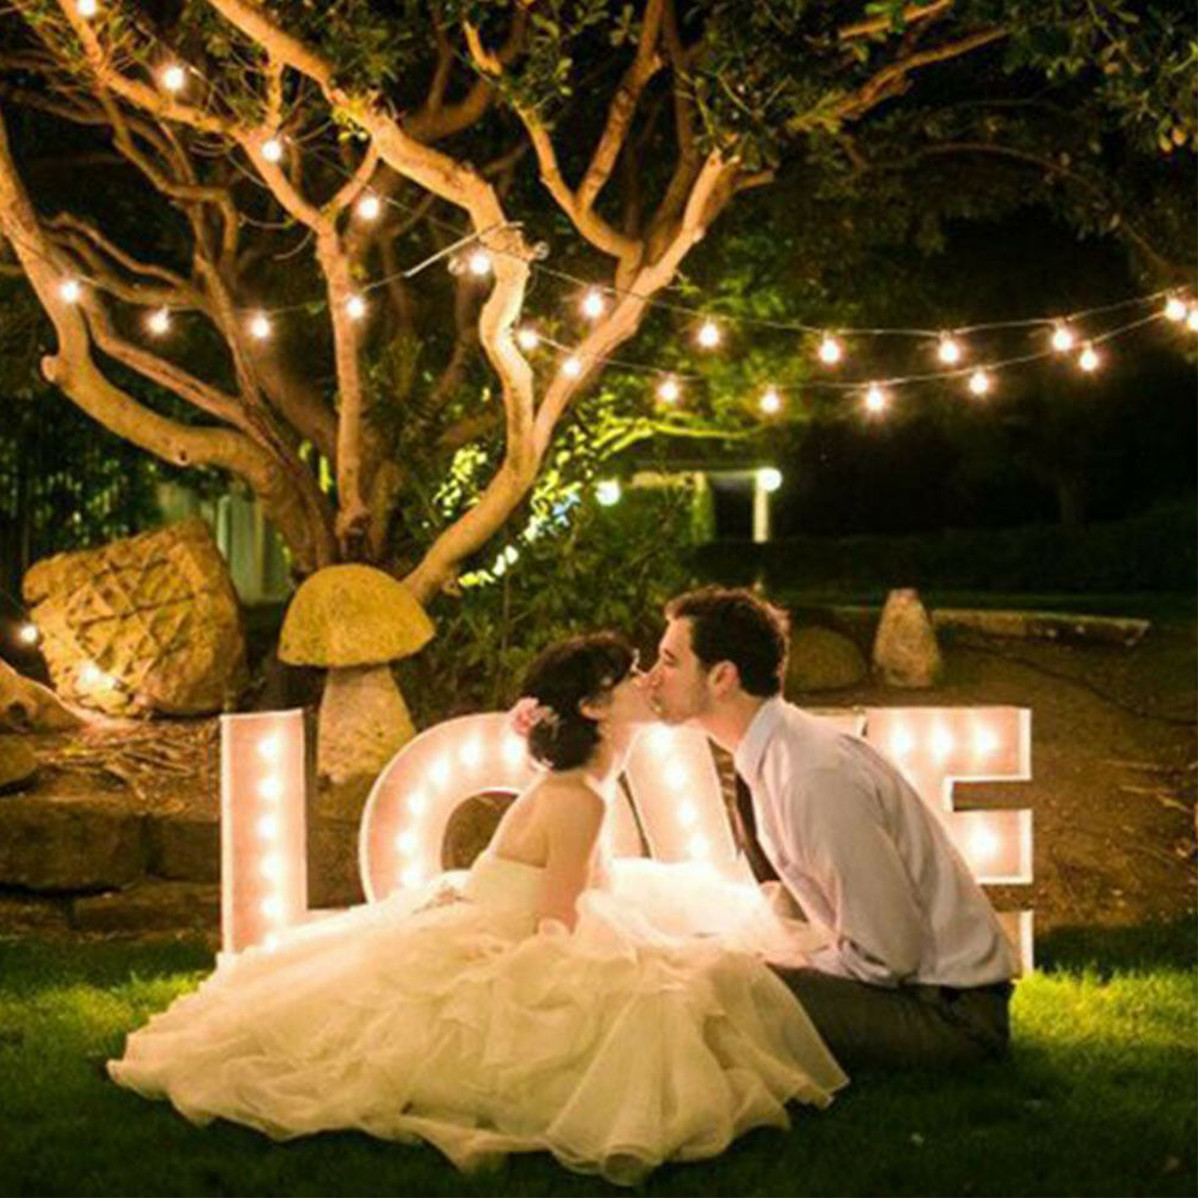 10-LED-Bulbs-String-Lights-Fairy-Lamp-Patio-Party-Yard-Garden-Wedding-Home-Decorative-Night-Light-1538526-9